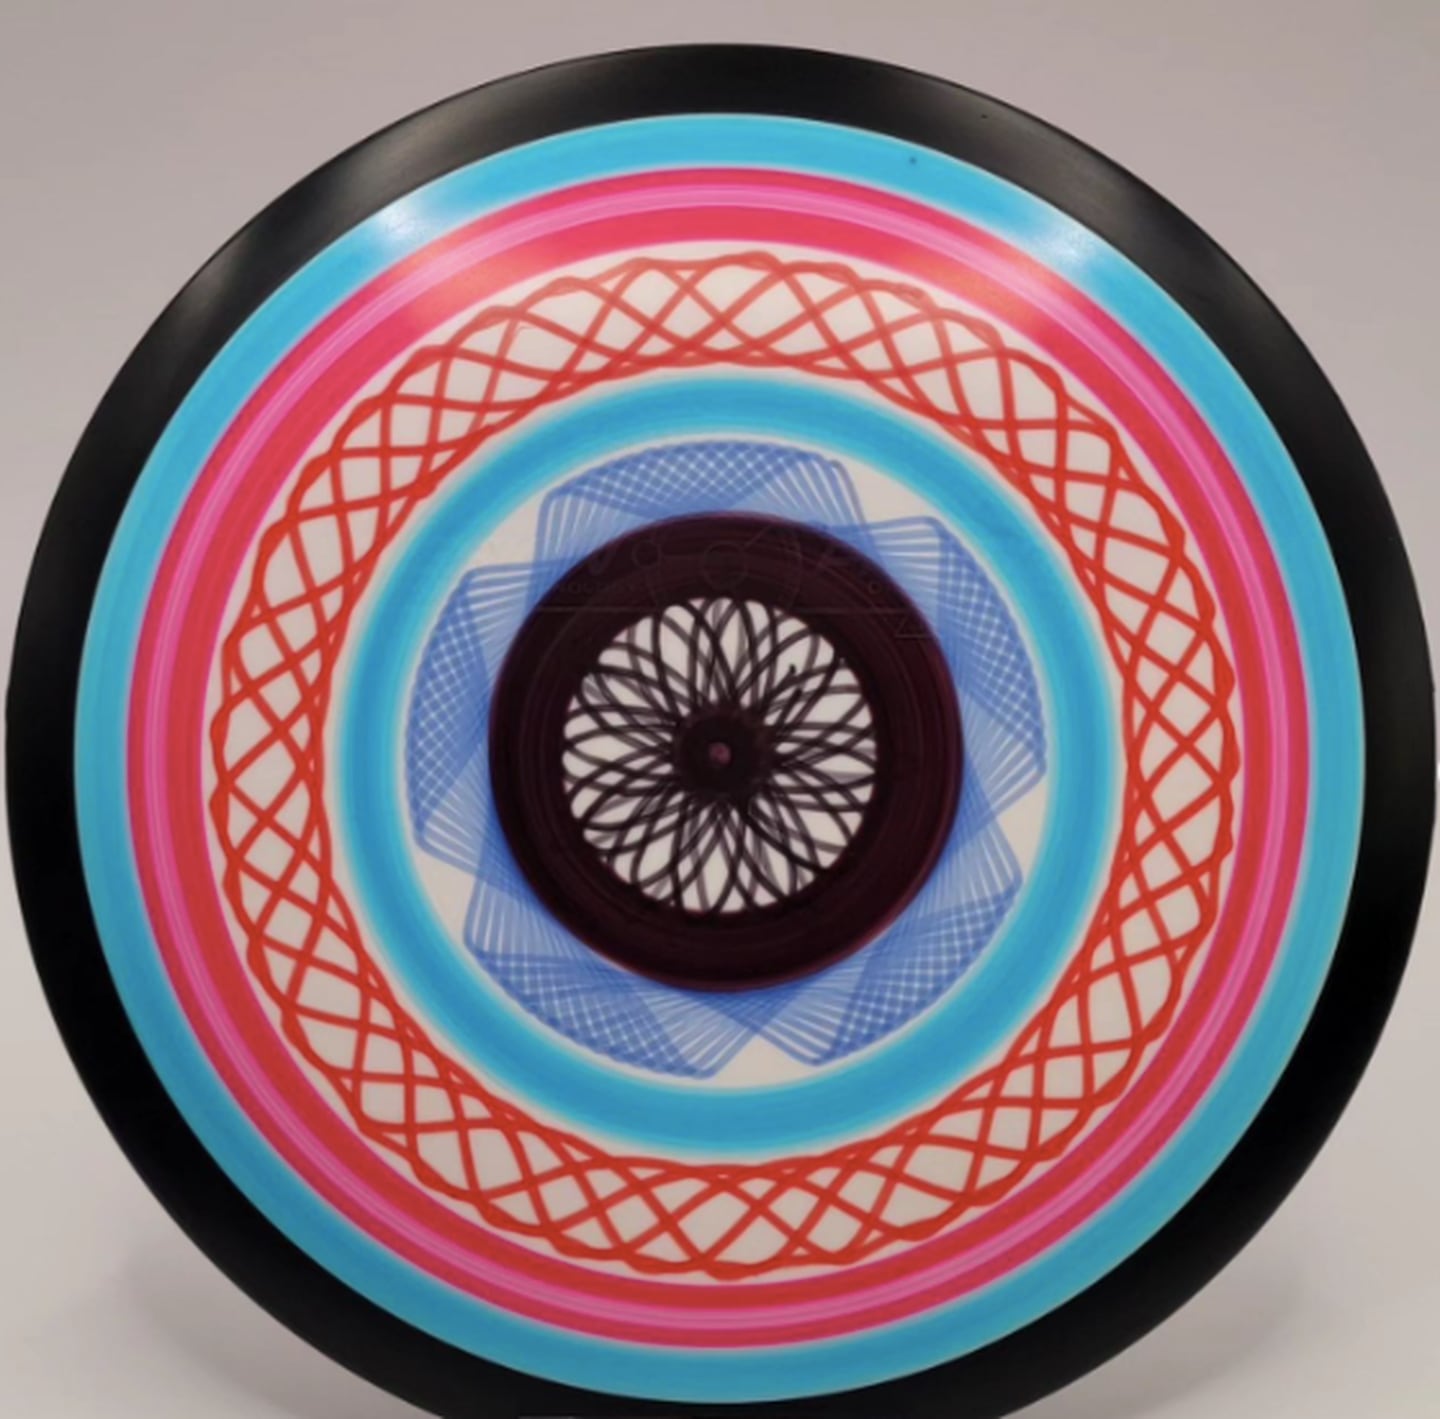 A disc Mike Muggli created featuring his intricate stencil work.